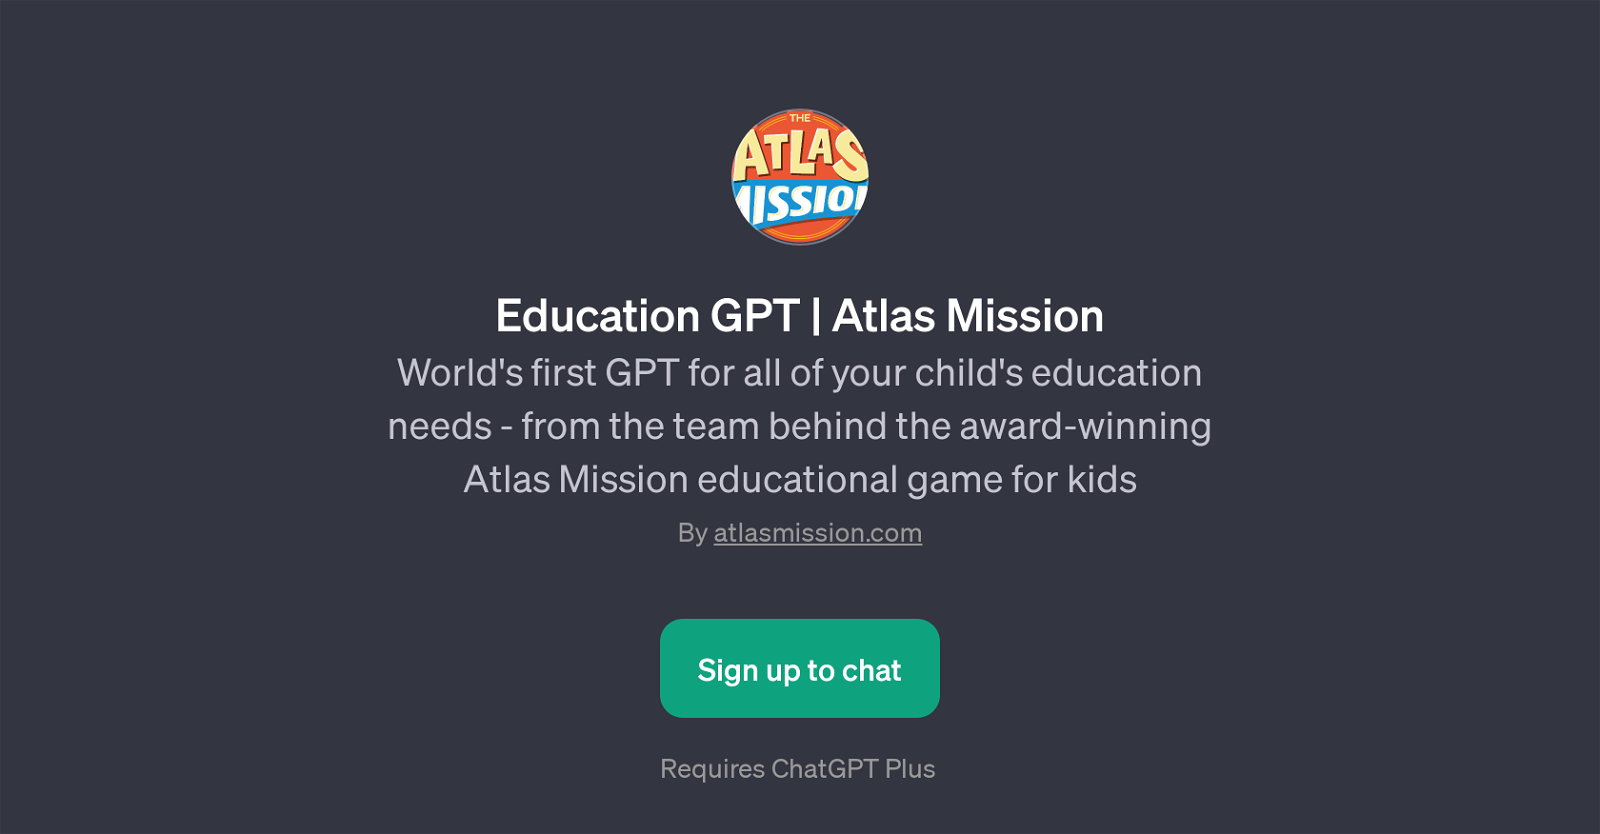 Education GPT | Atlas Mission website